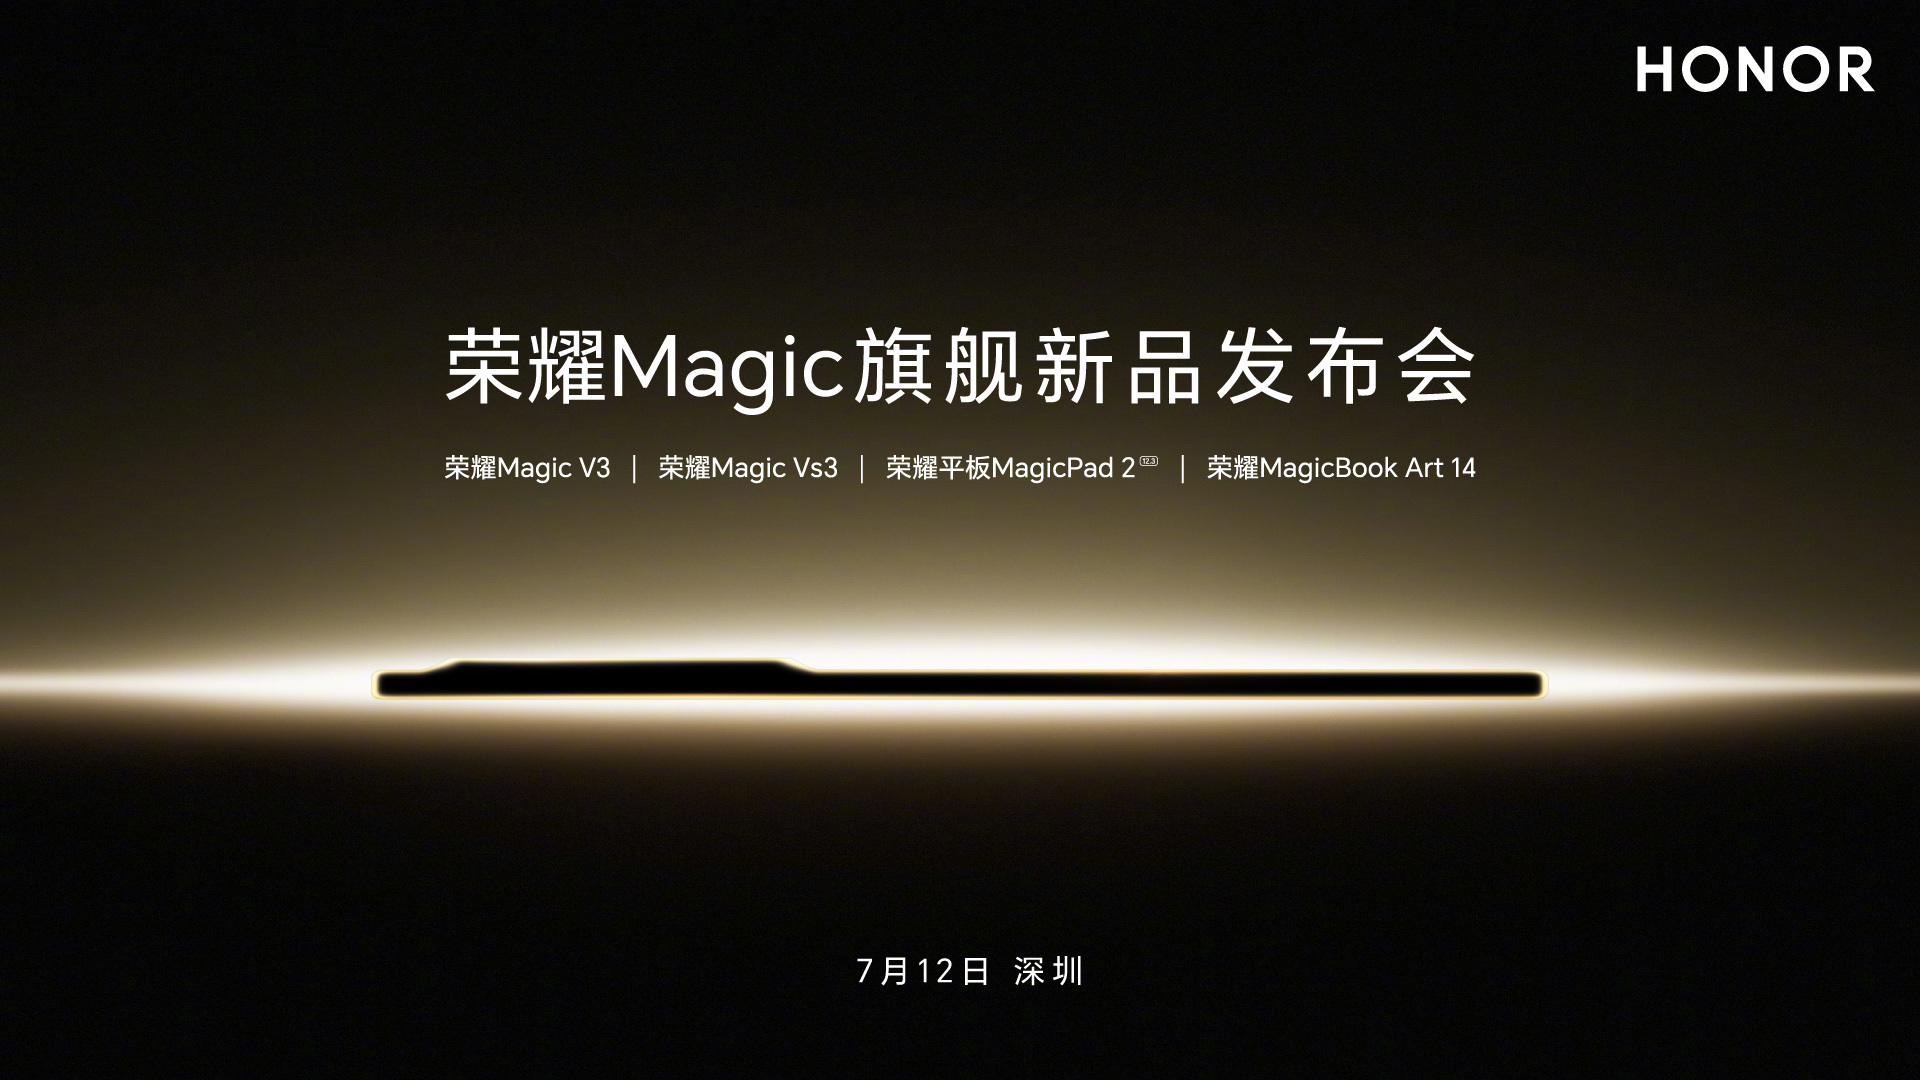 Nie tylko Magic V3: 12 lipca Honor zaprezentuje również Magic Vs3, MagicPad 2 i MagicBook Art 14.